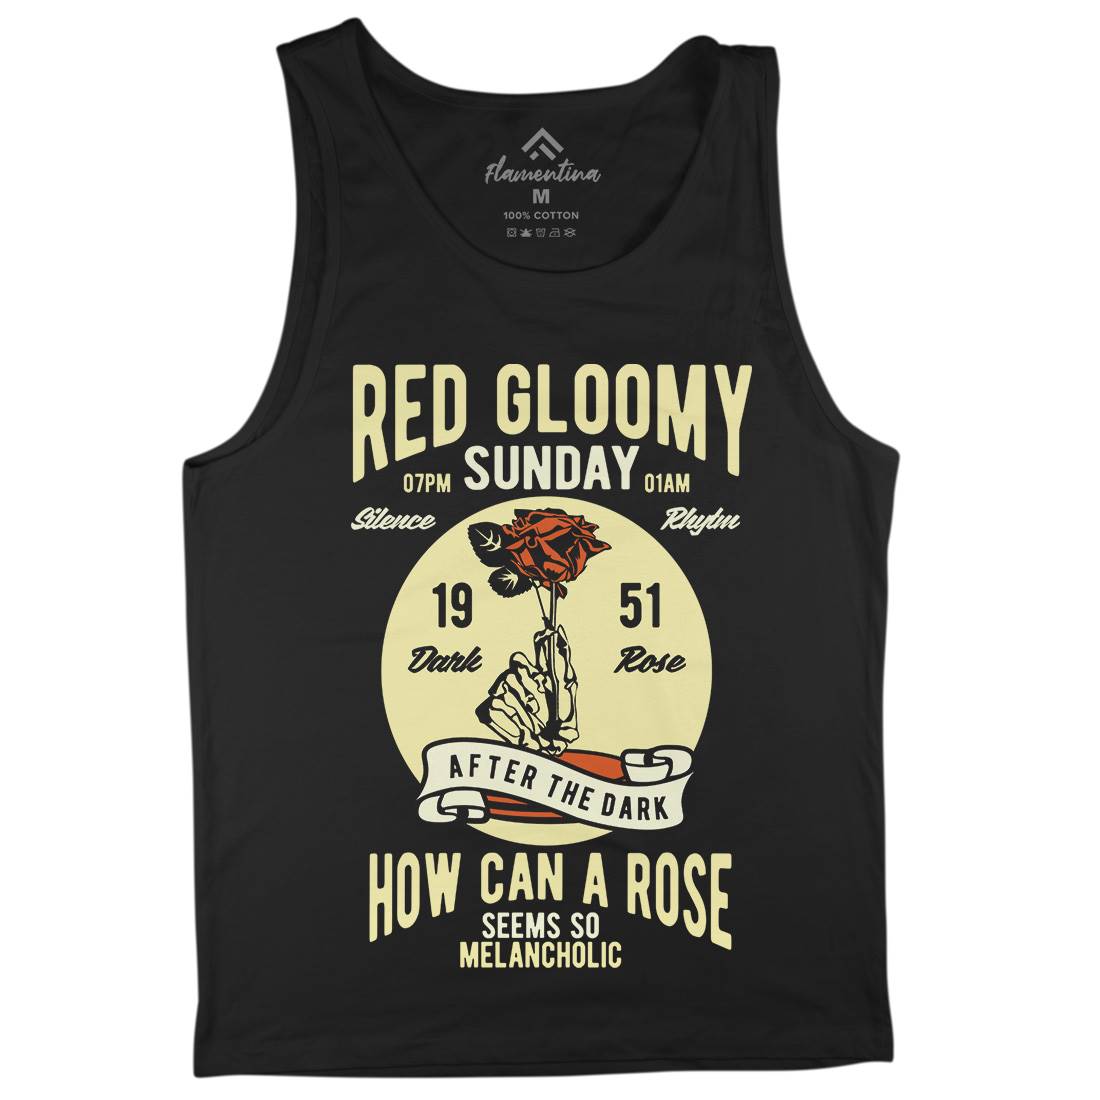 Red Gloomy Sunday Mens Tank Top Vest Retro B437